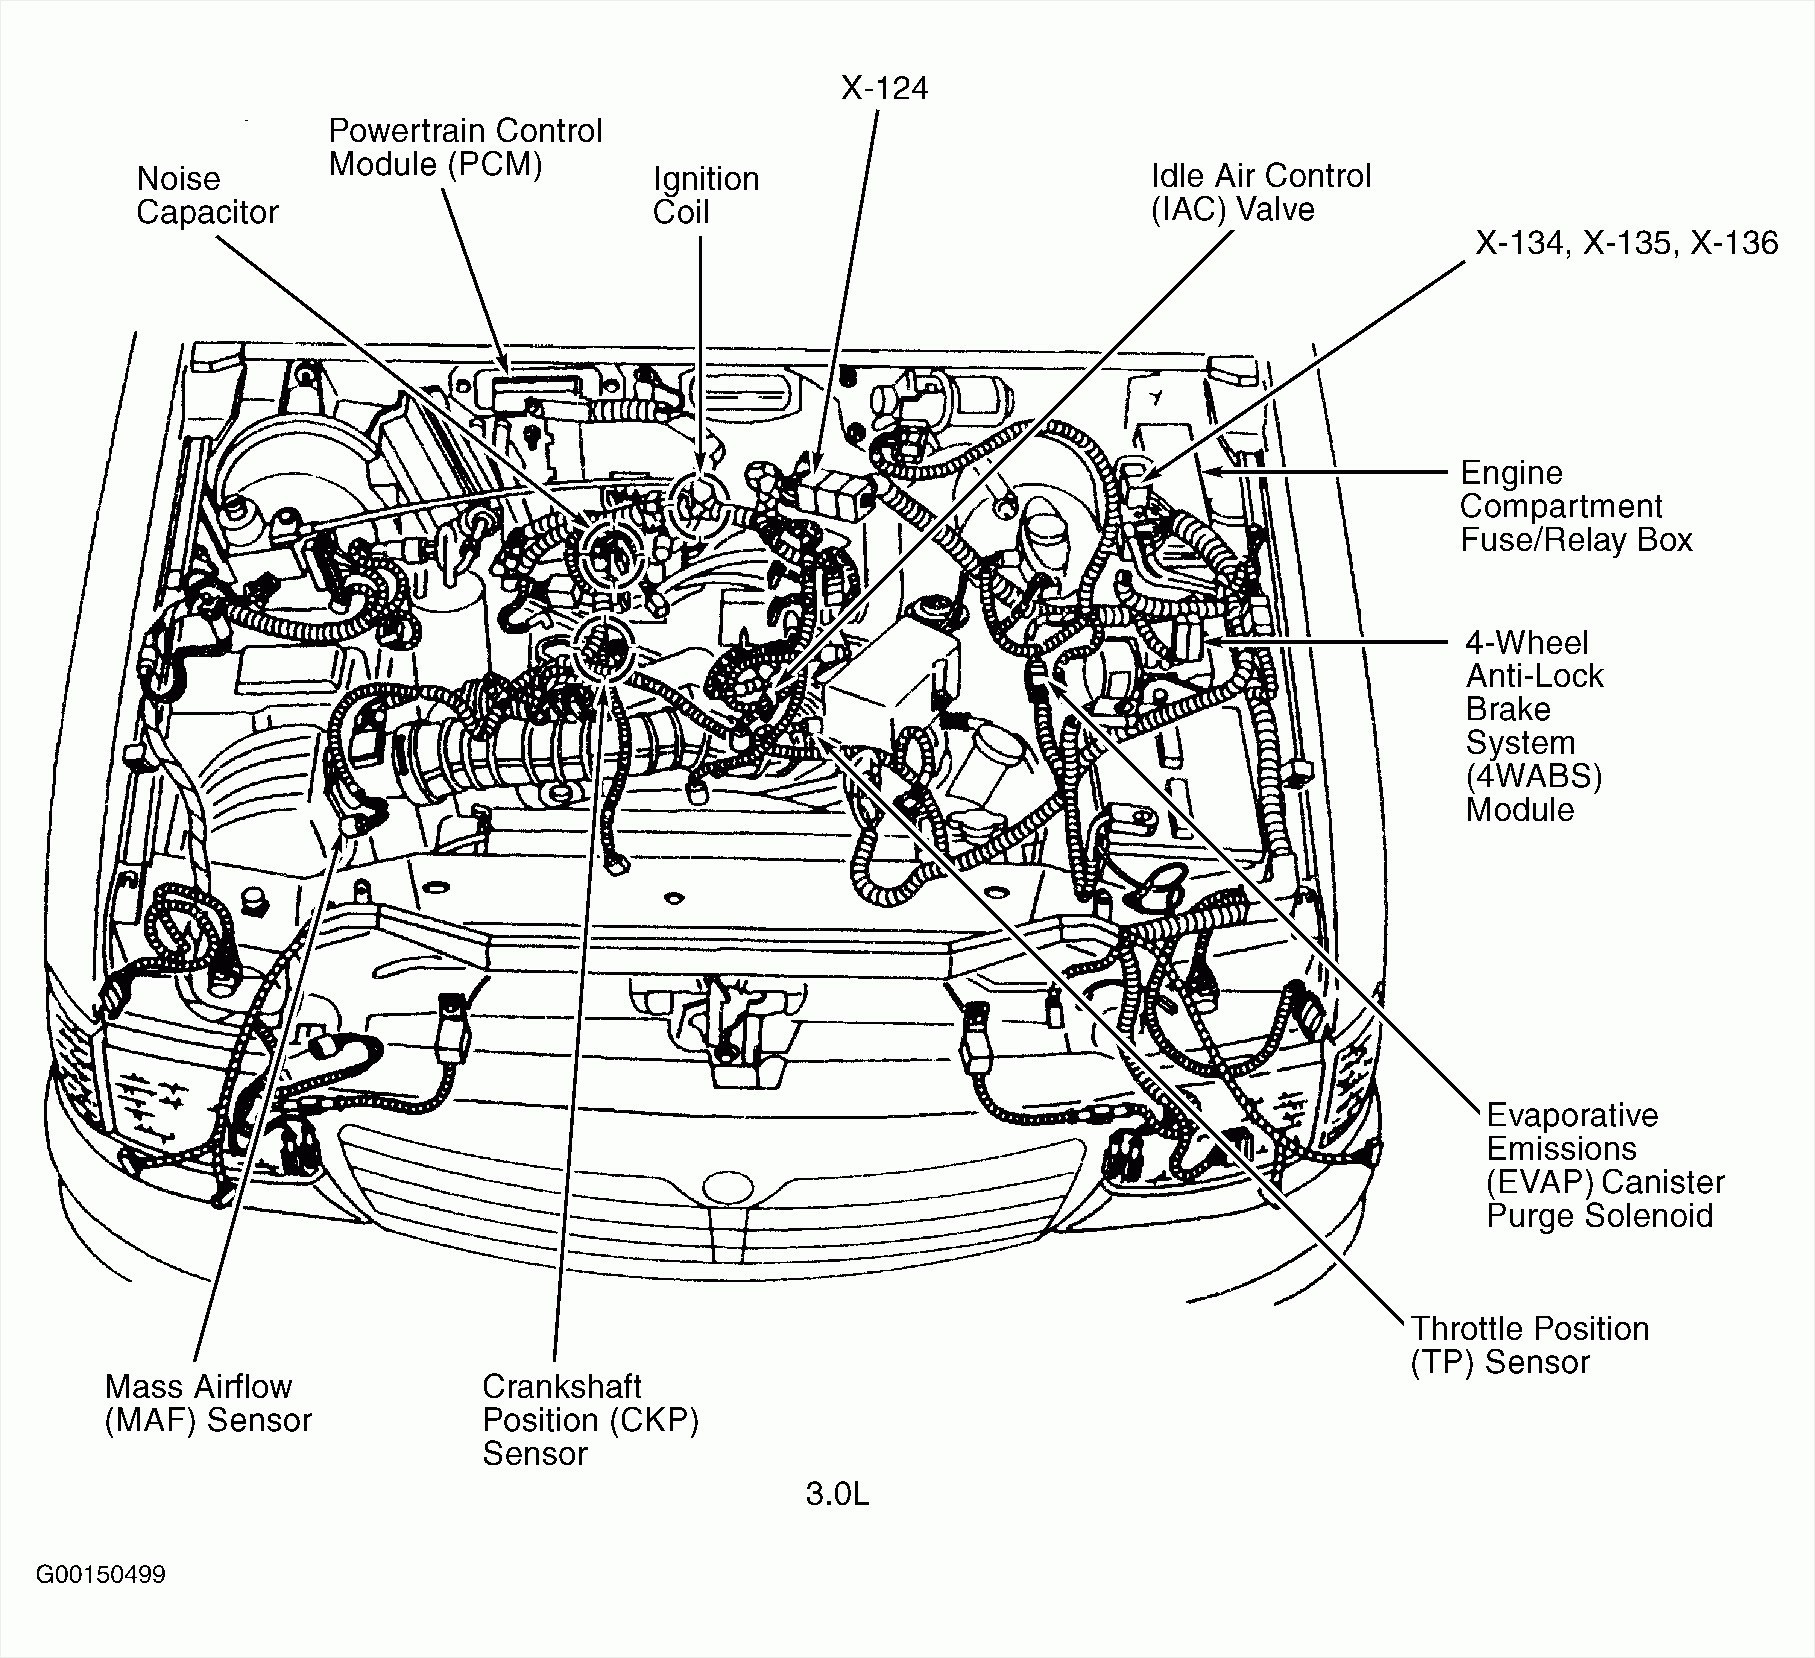 Parts Of A Car Engine Diagram 04 Mazda 6 Engine Diagram Wiring Diagrams Of Parts Of A Car Engine Diagram